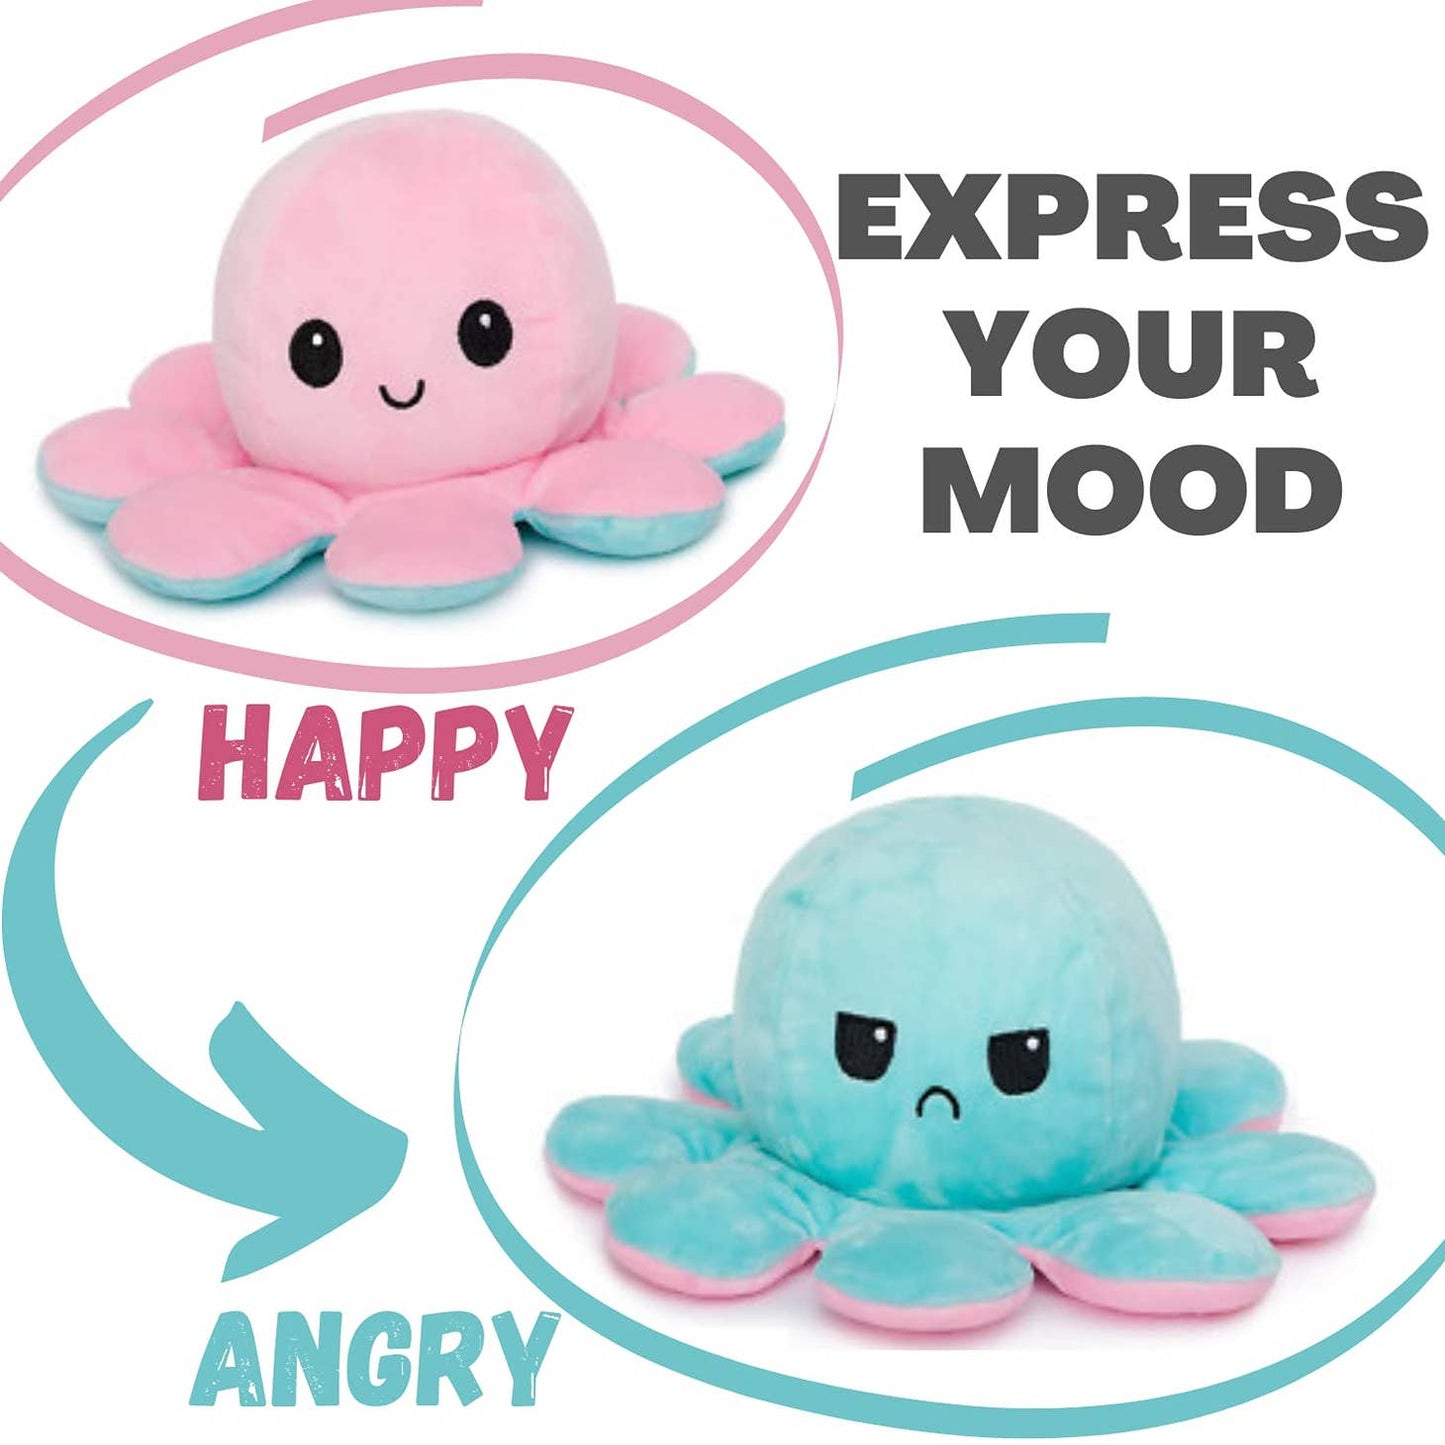 Reversible Mood Octopus Soft Plush Toy